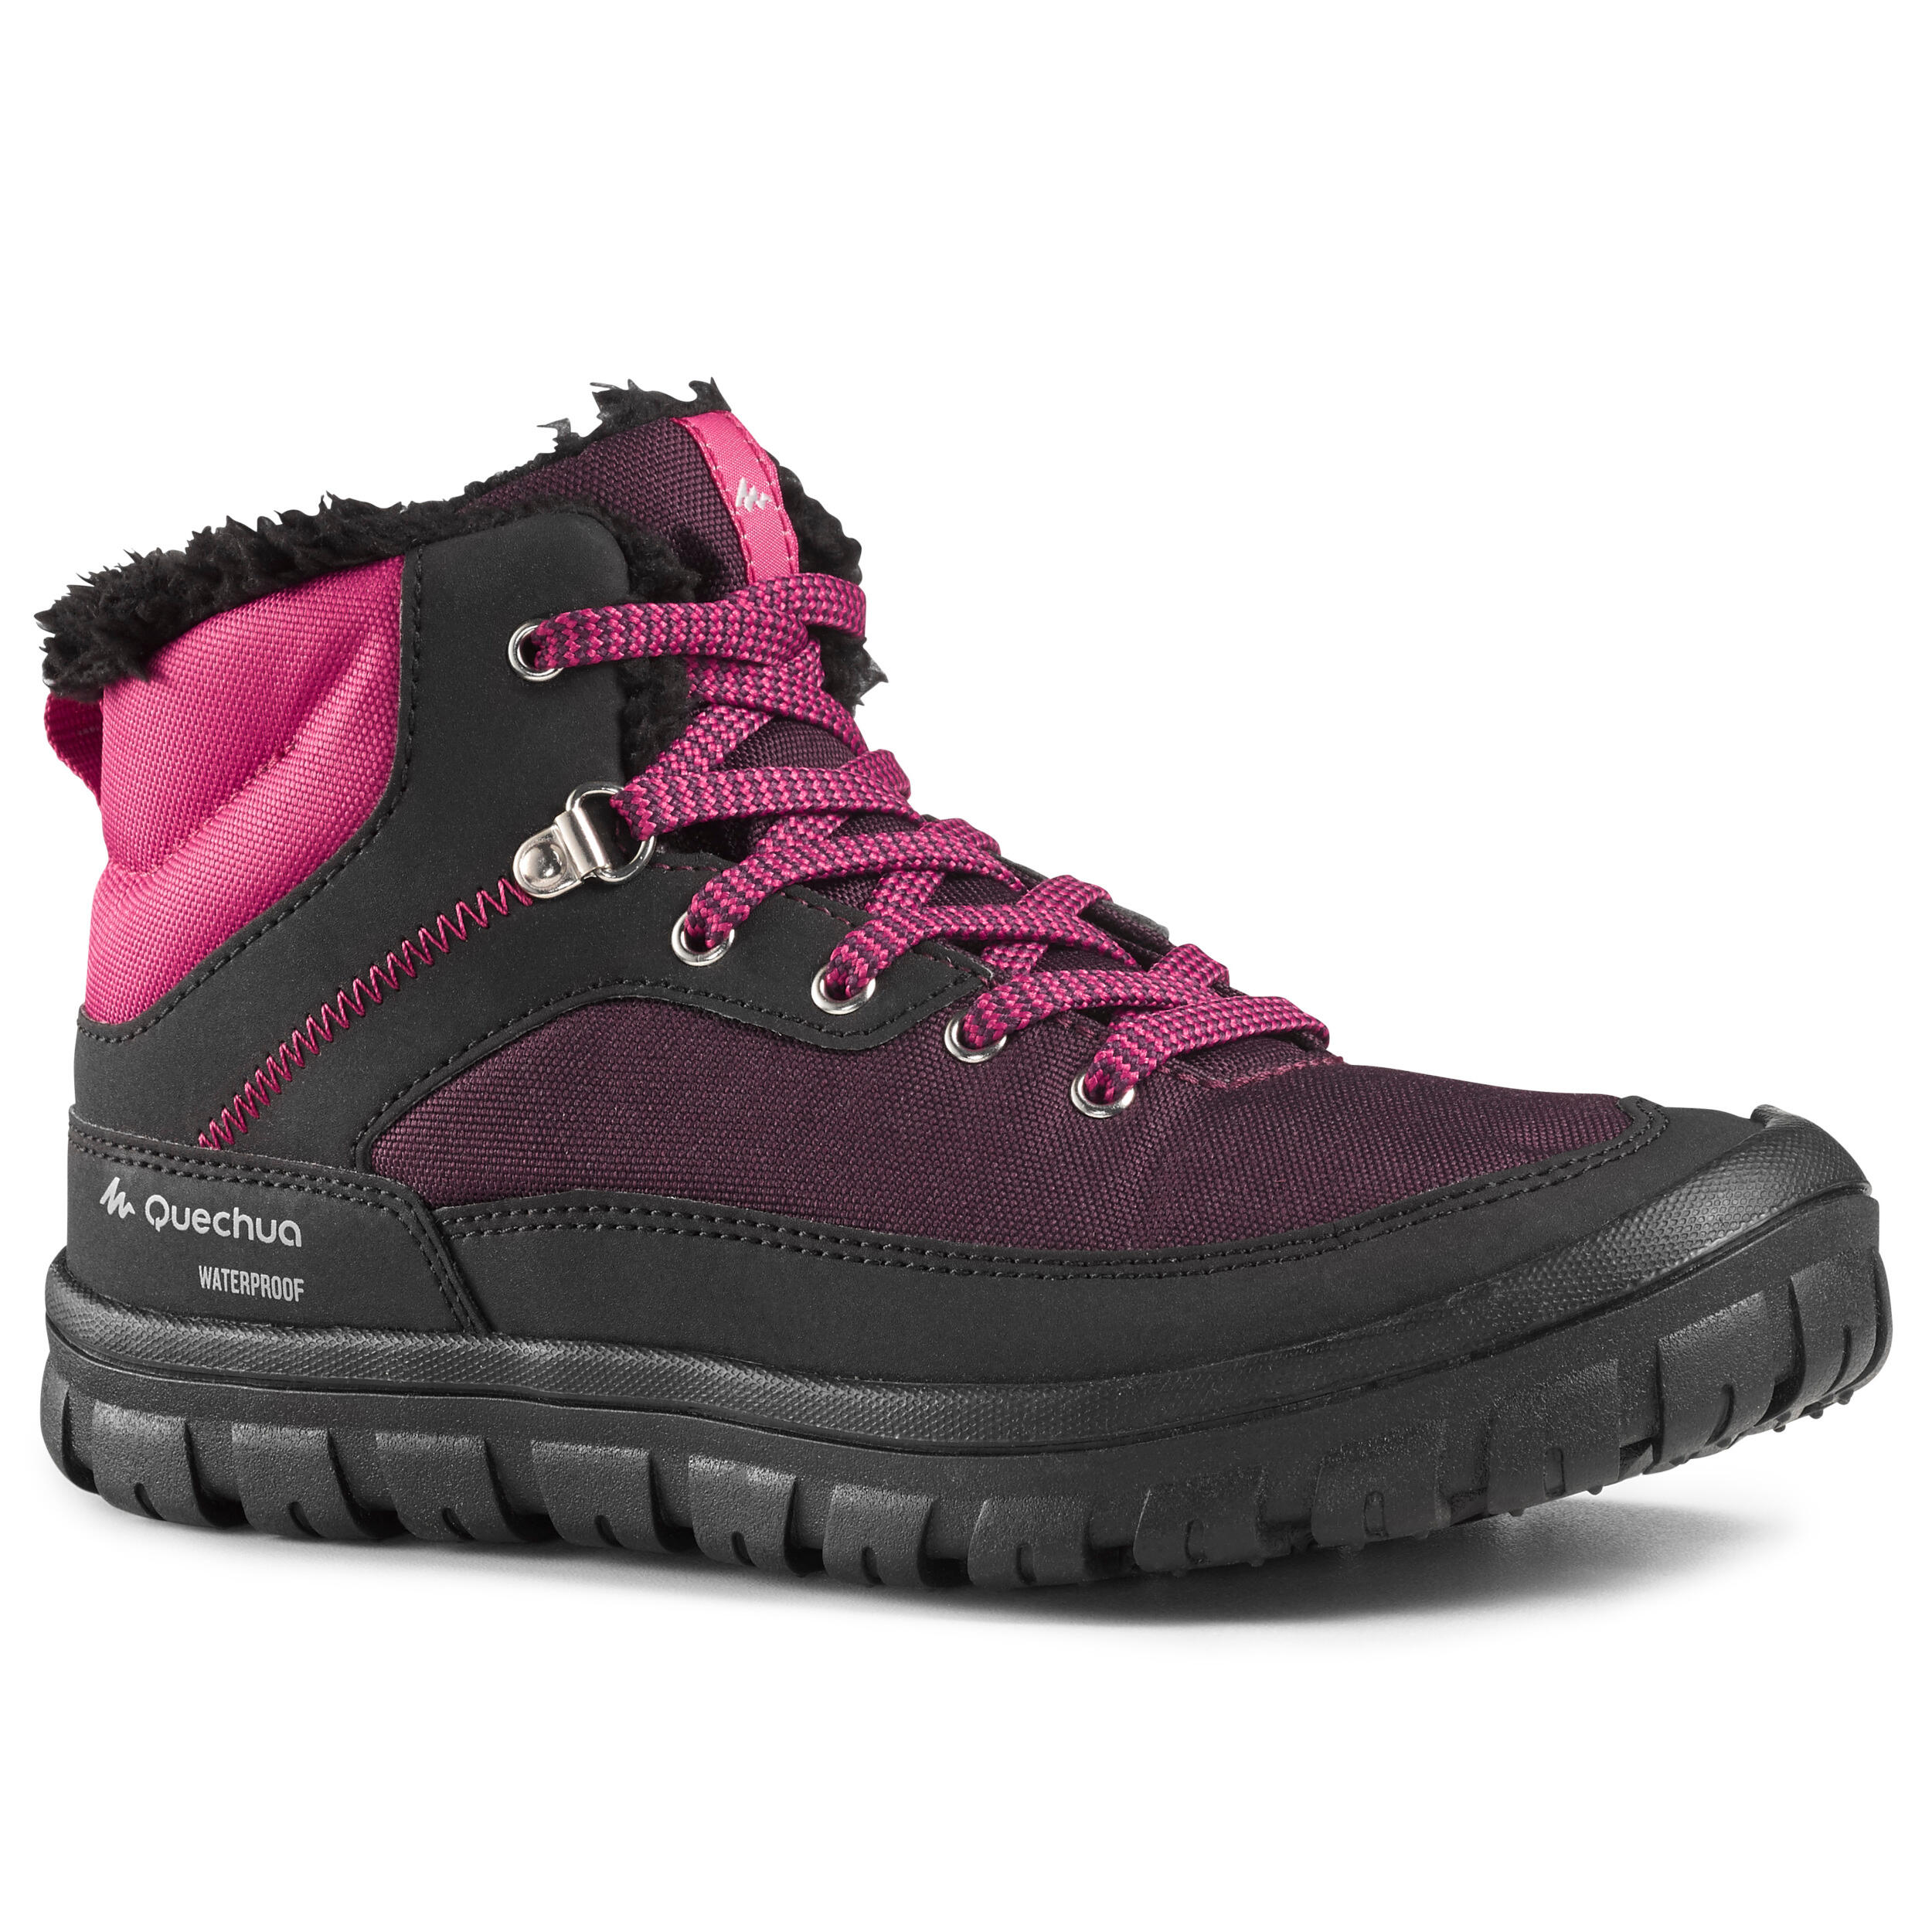 Kids’ Warm, Waterproof Lace-up Hiking Boots SH100 Warm Size 1 - 5.5 1/7